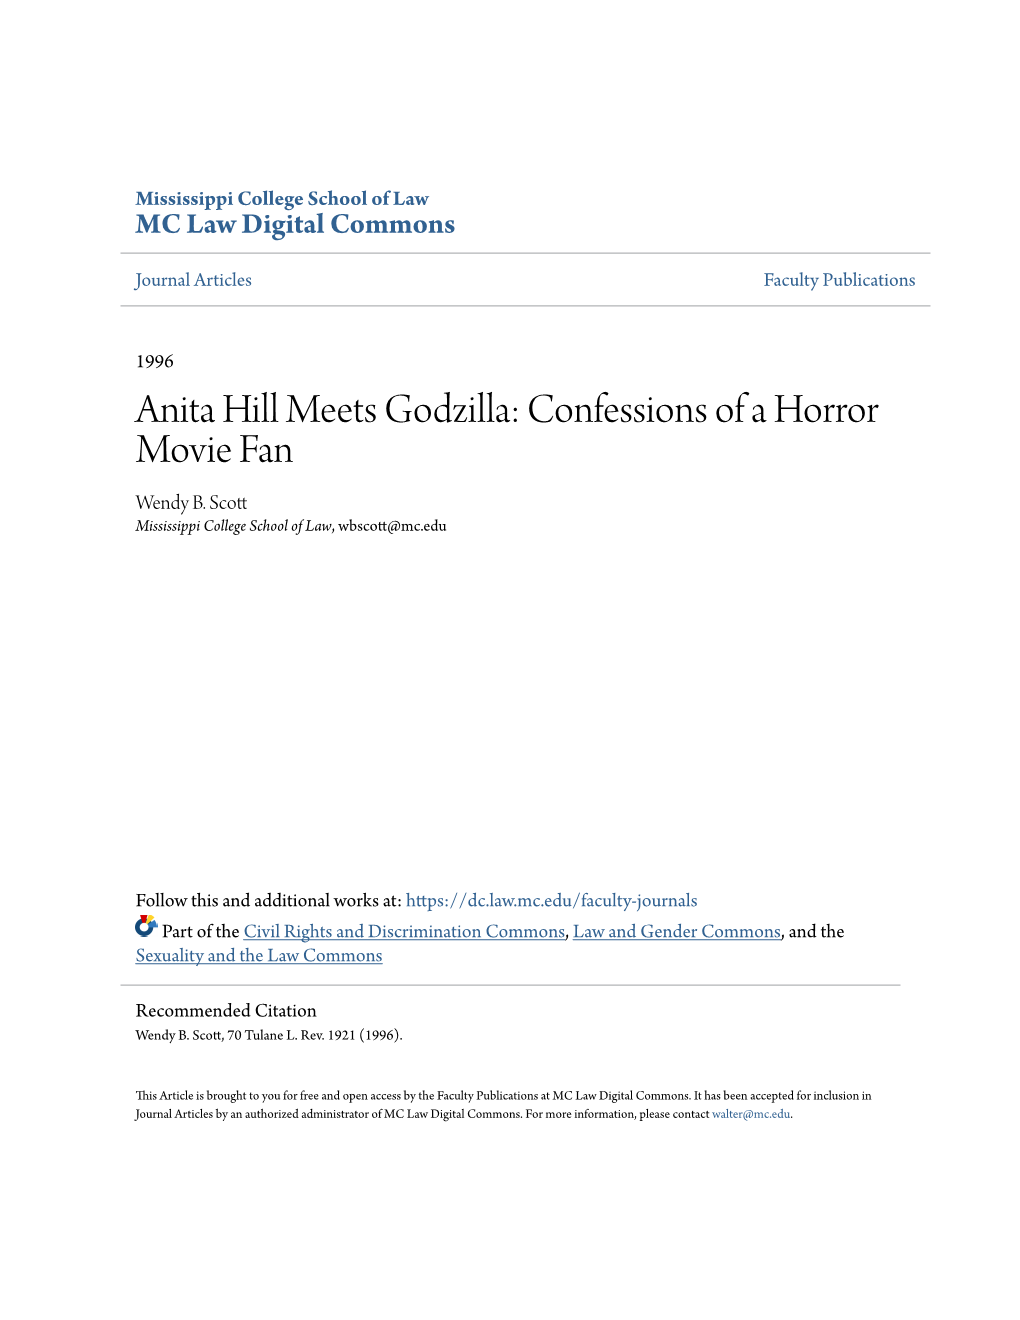 Anita Hill Meets Godzilla: Confessions of a Horror Movie Fan Wendy B